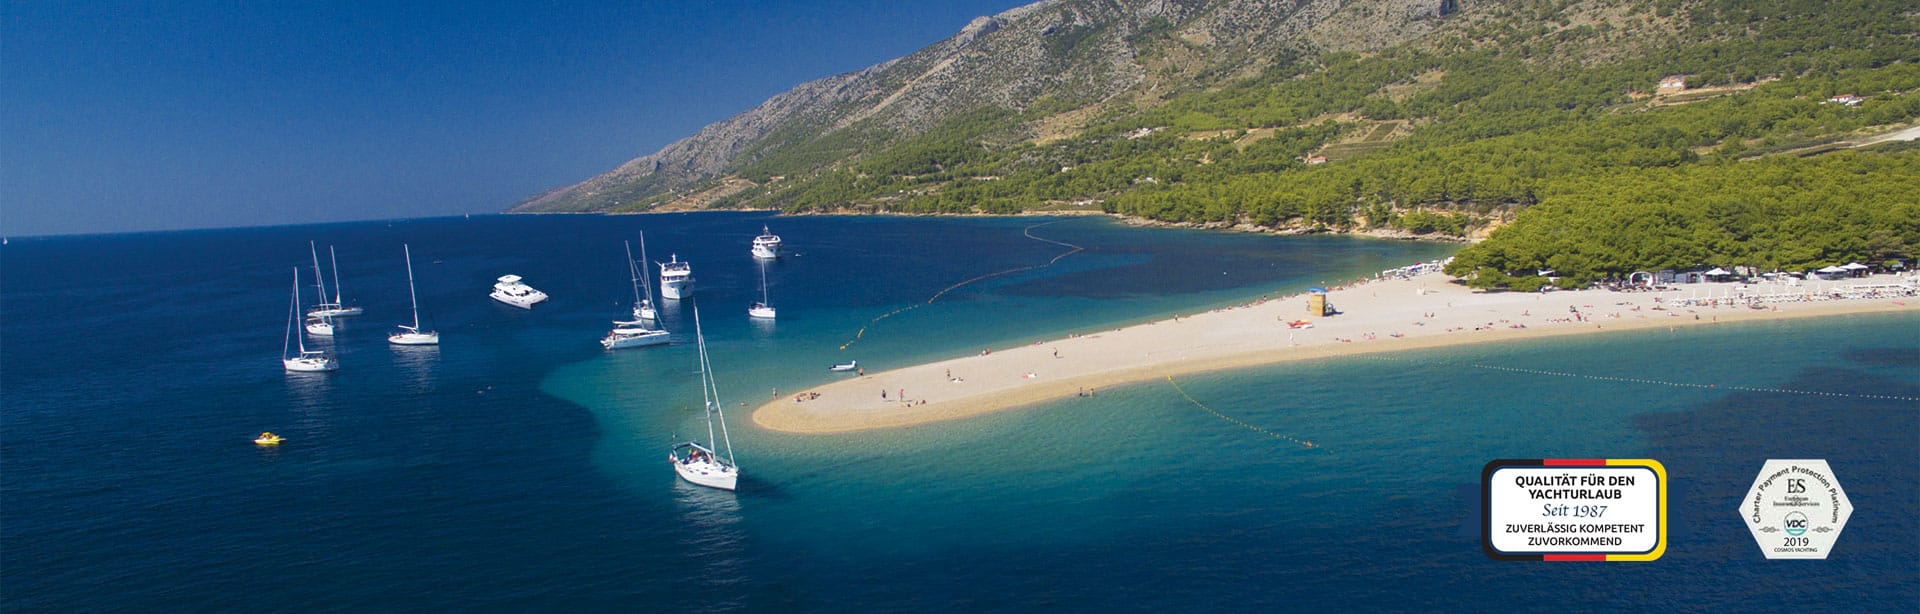 cosmos yachting croatia